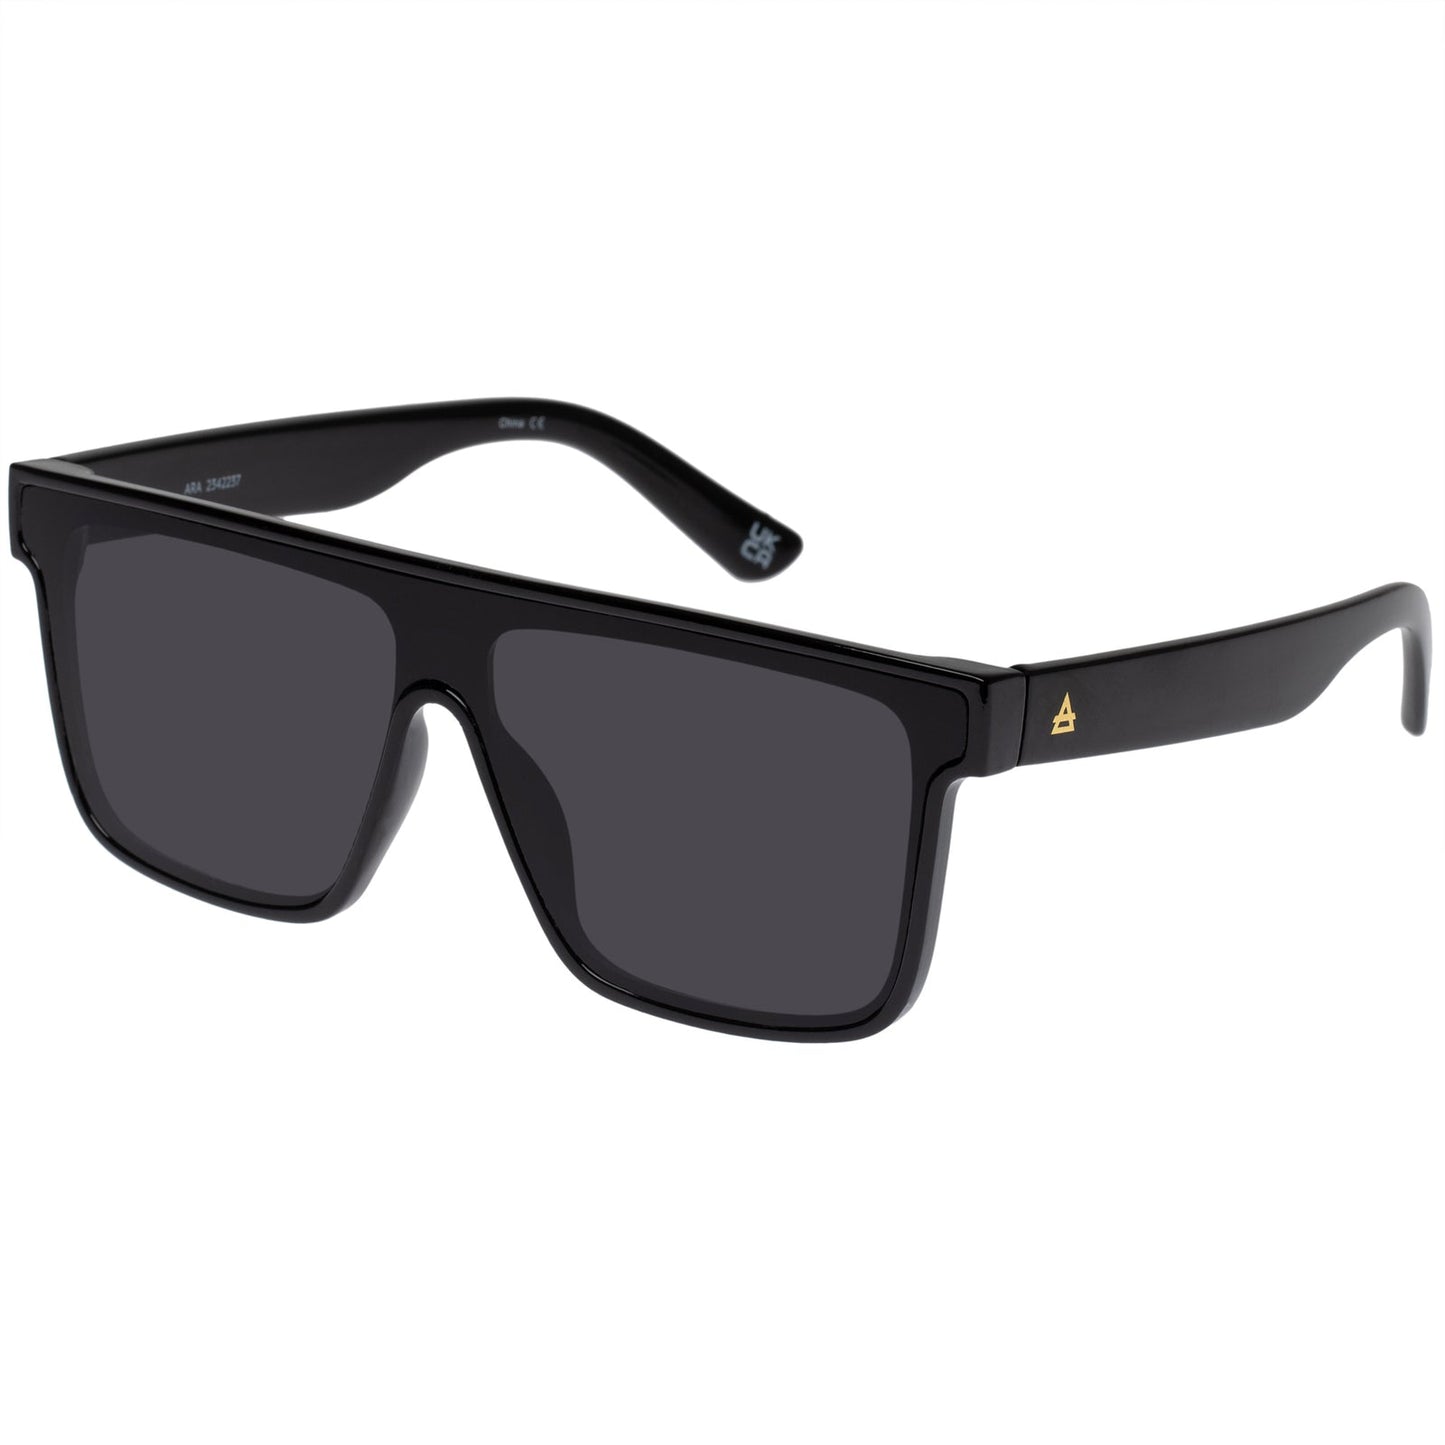 Sunglasses - Ara Shiny Black